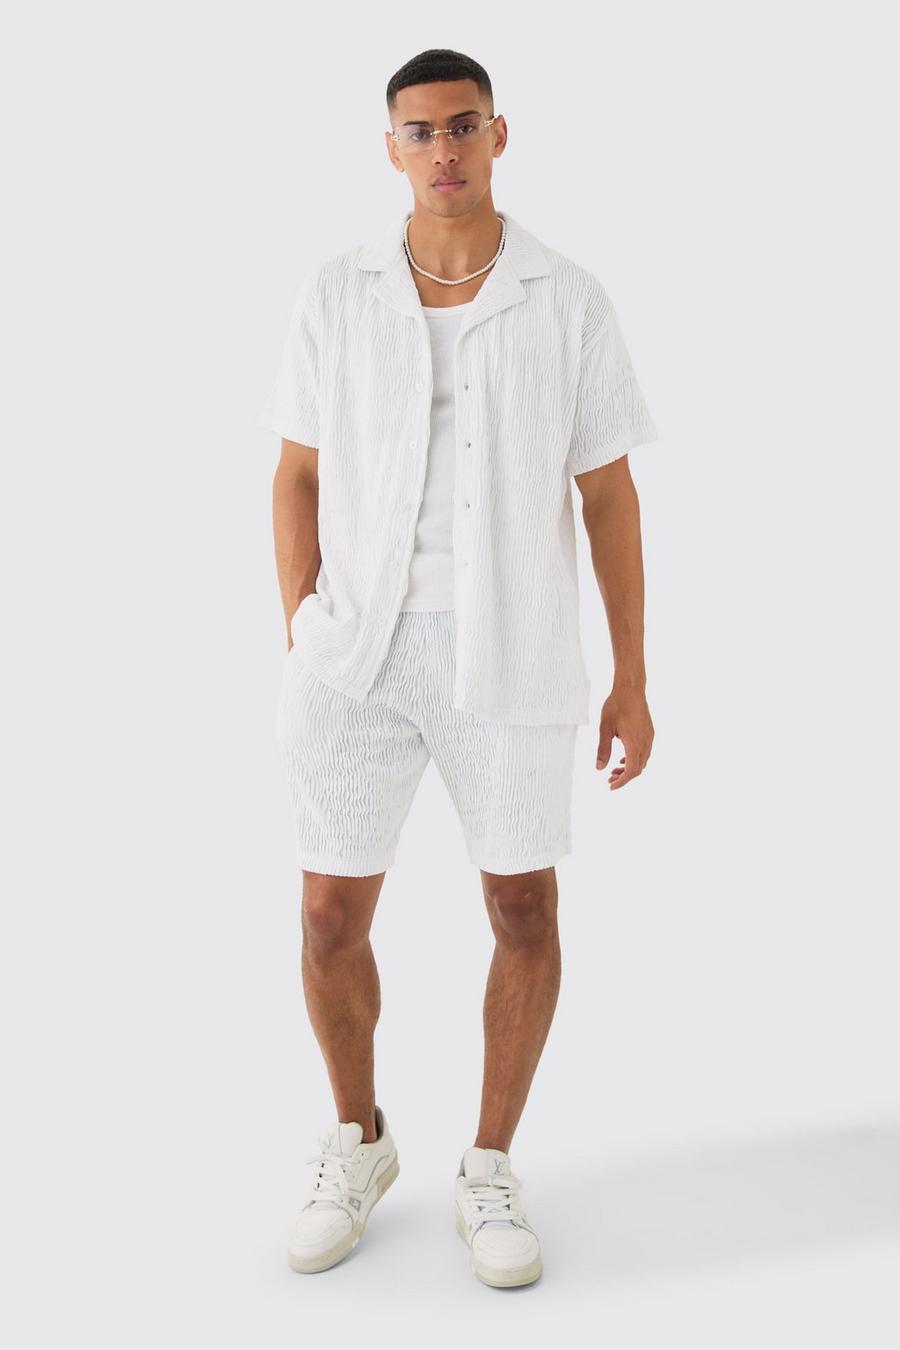 White Oversized Ripple Pleated Shirt And Short